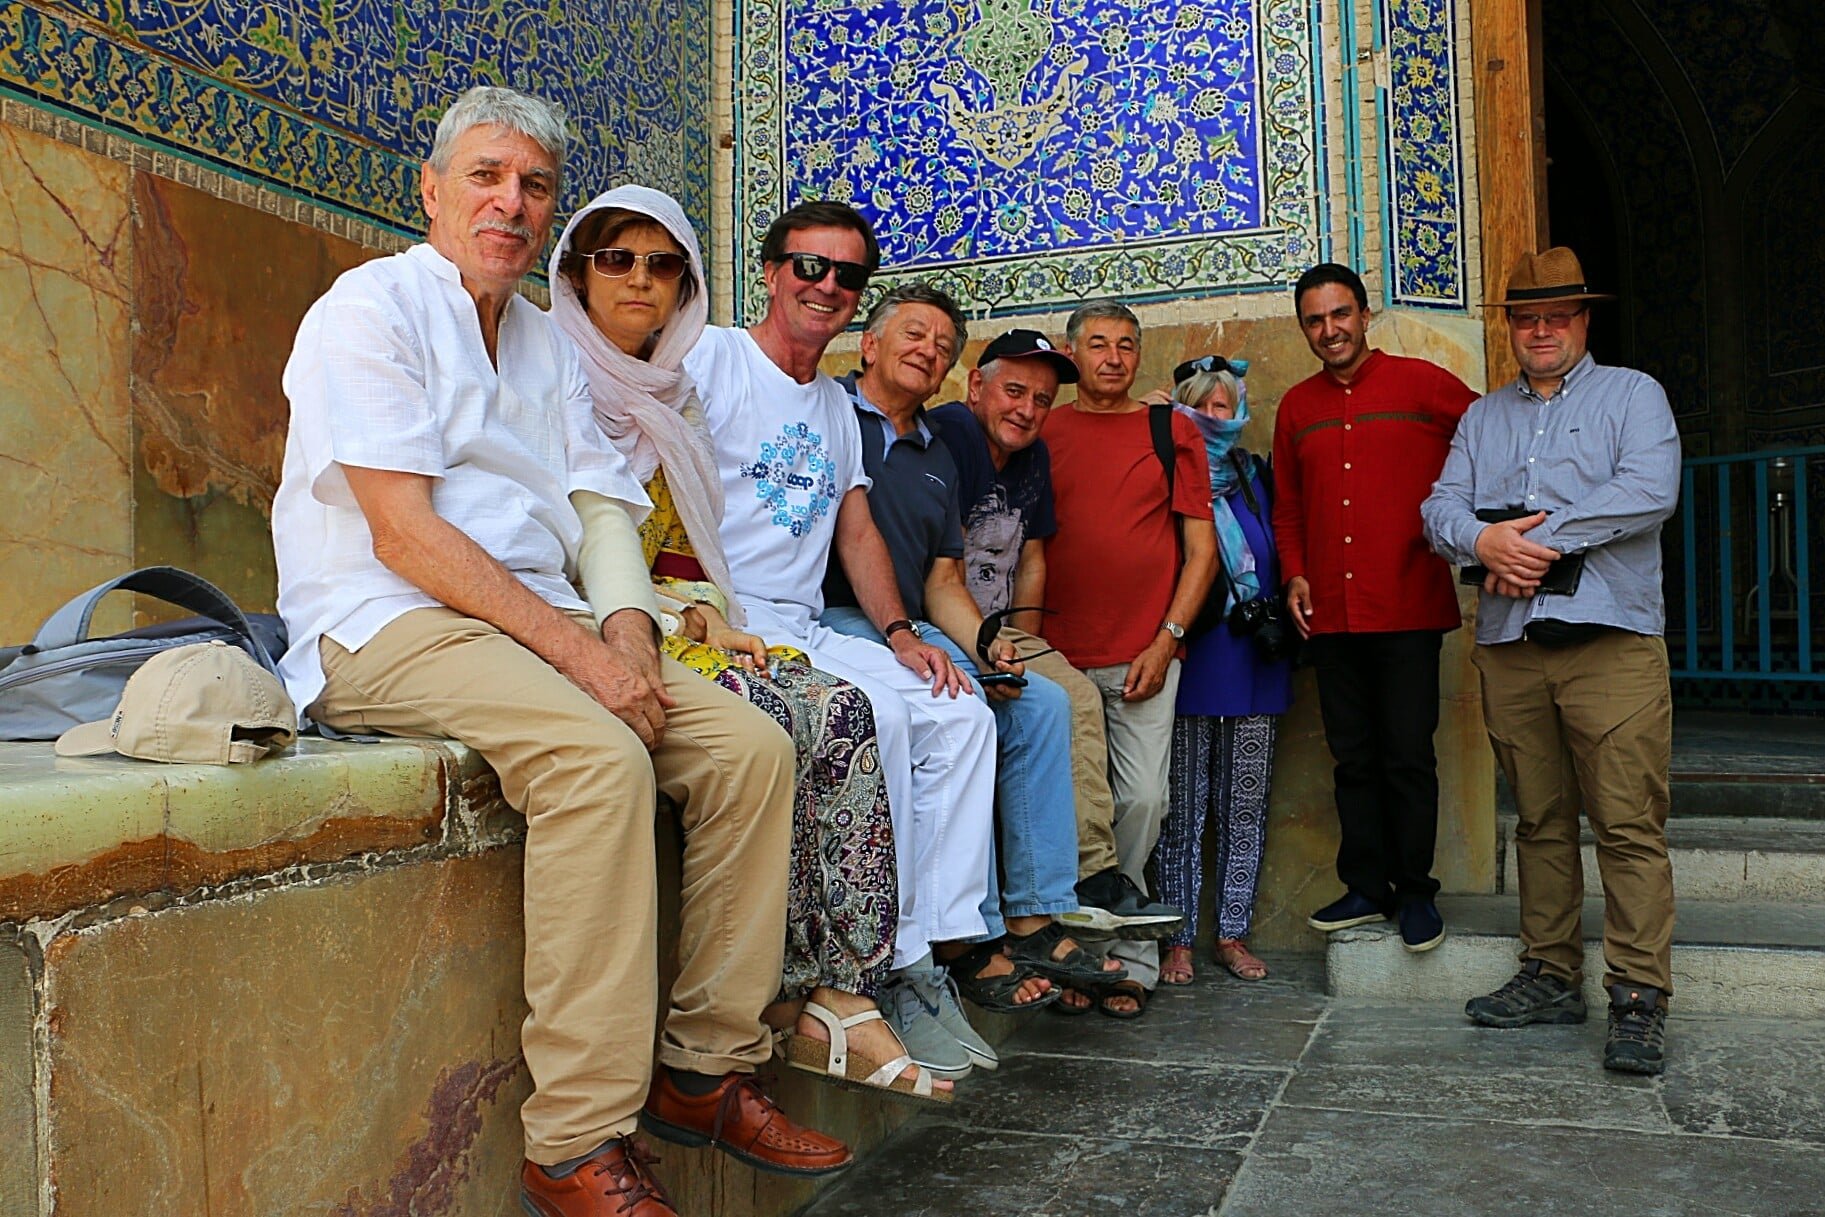 Why Choose Surfiran As A Tour Operator To Visit Iran